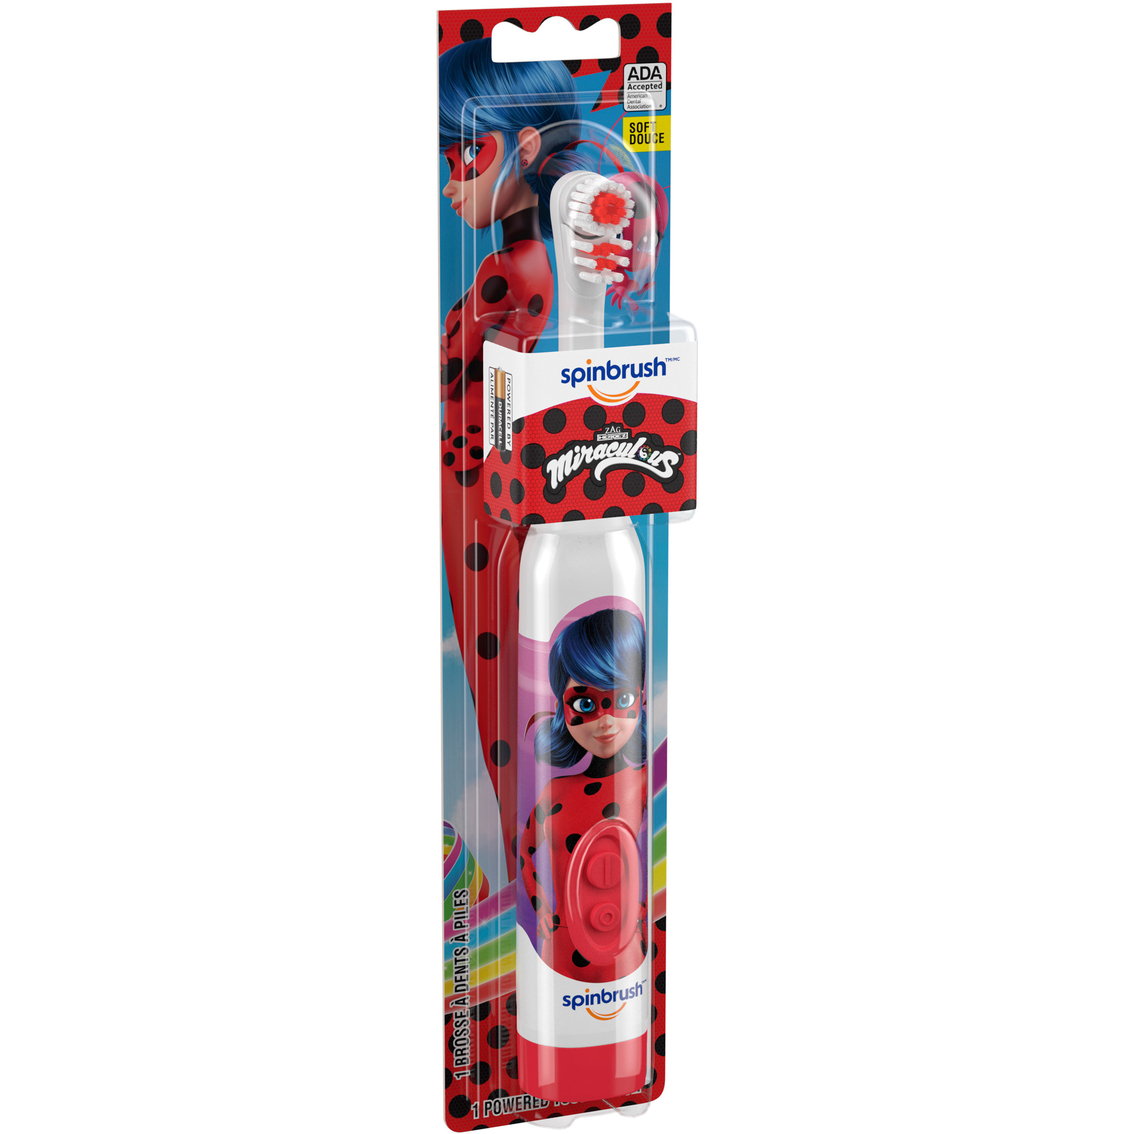 Kids Miraculous Ladybug Spin Brush Electric Toothbrush - Image 2 of 2